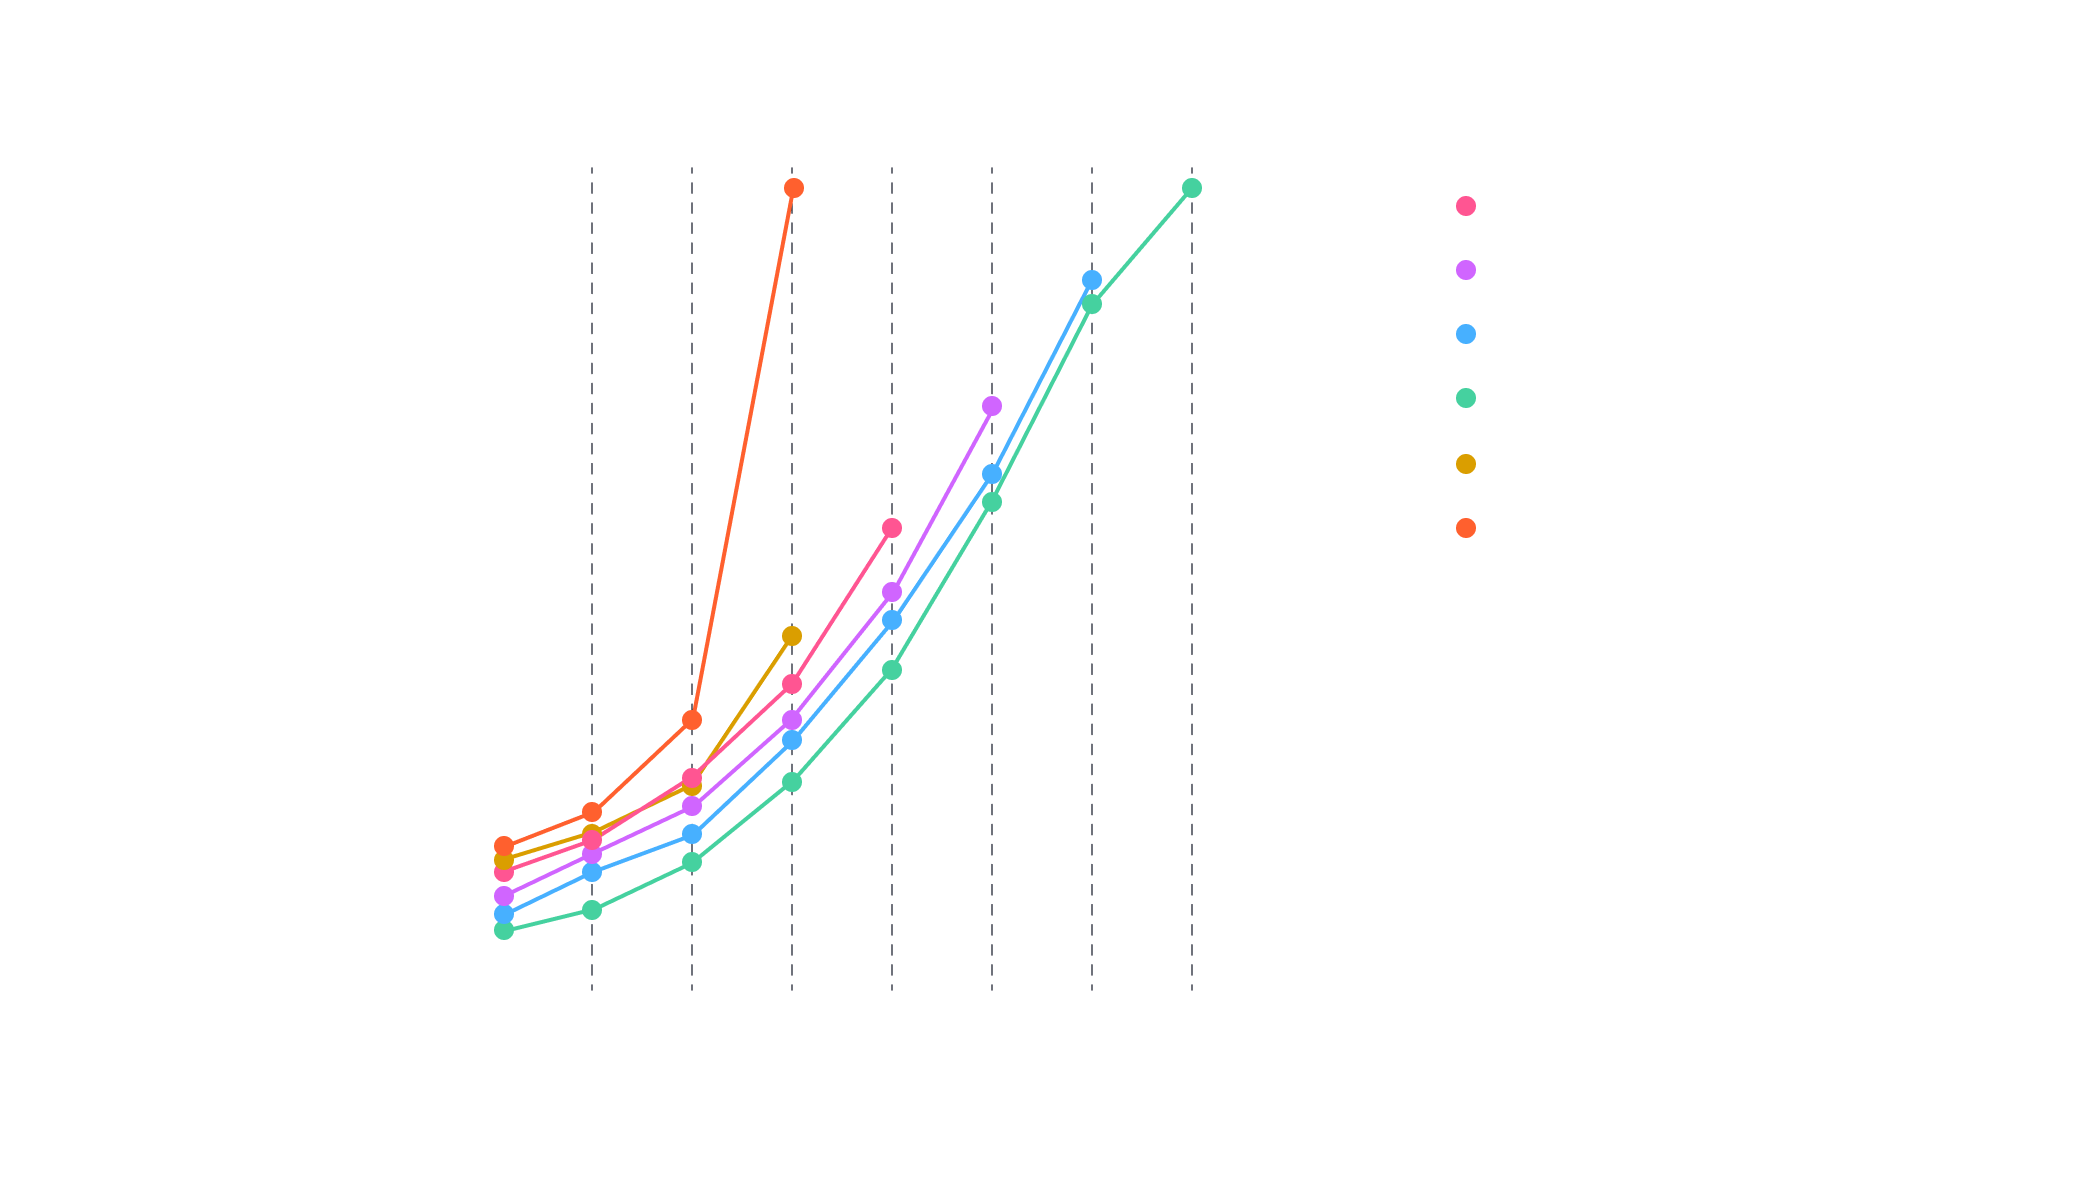 Benchmark for 50k shots on qsim CPU